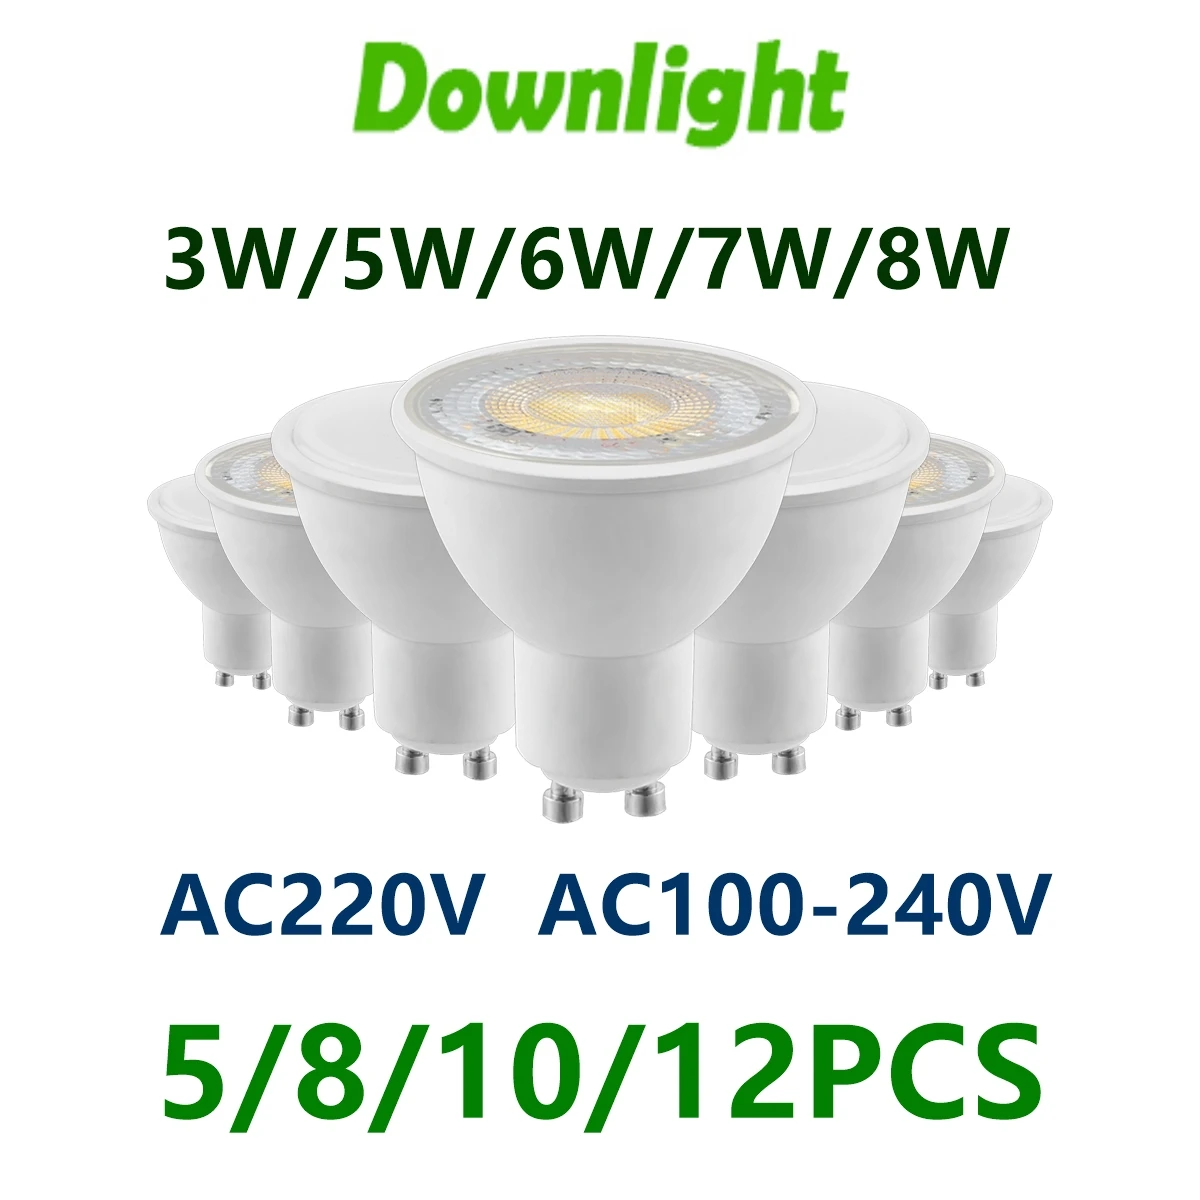 5-12PCS LED spot light GU10 AC220V AC120V LED energy saving bulb 3W 5W 6W 7W 8W You can replace the 50W halogen lamp